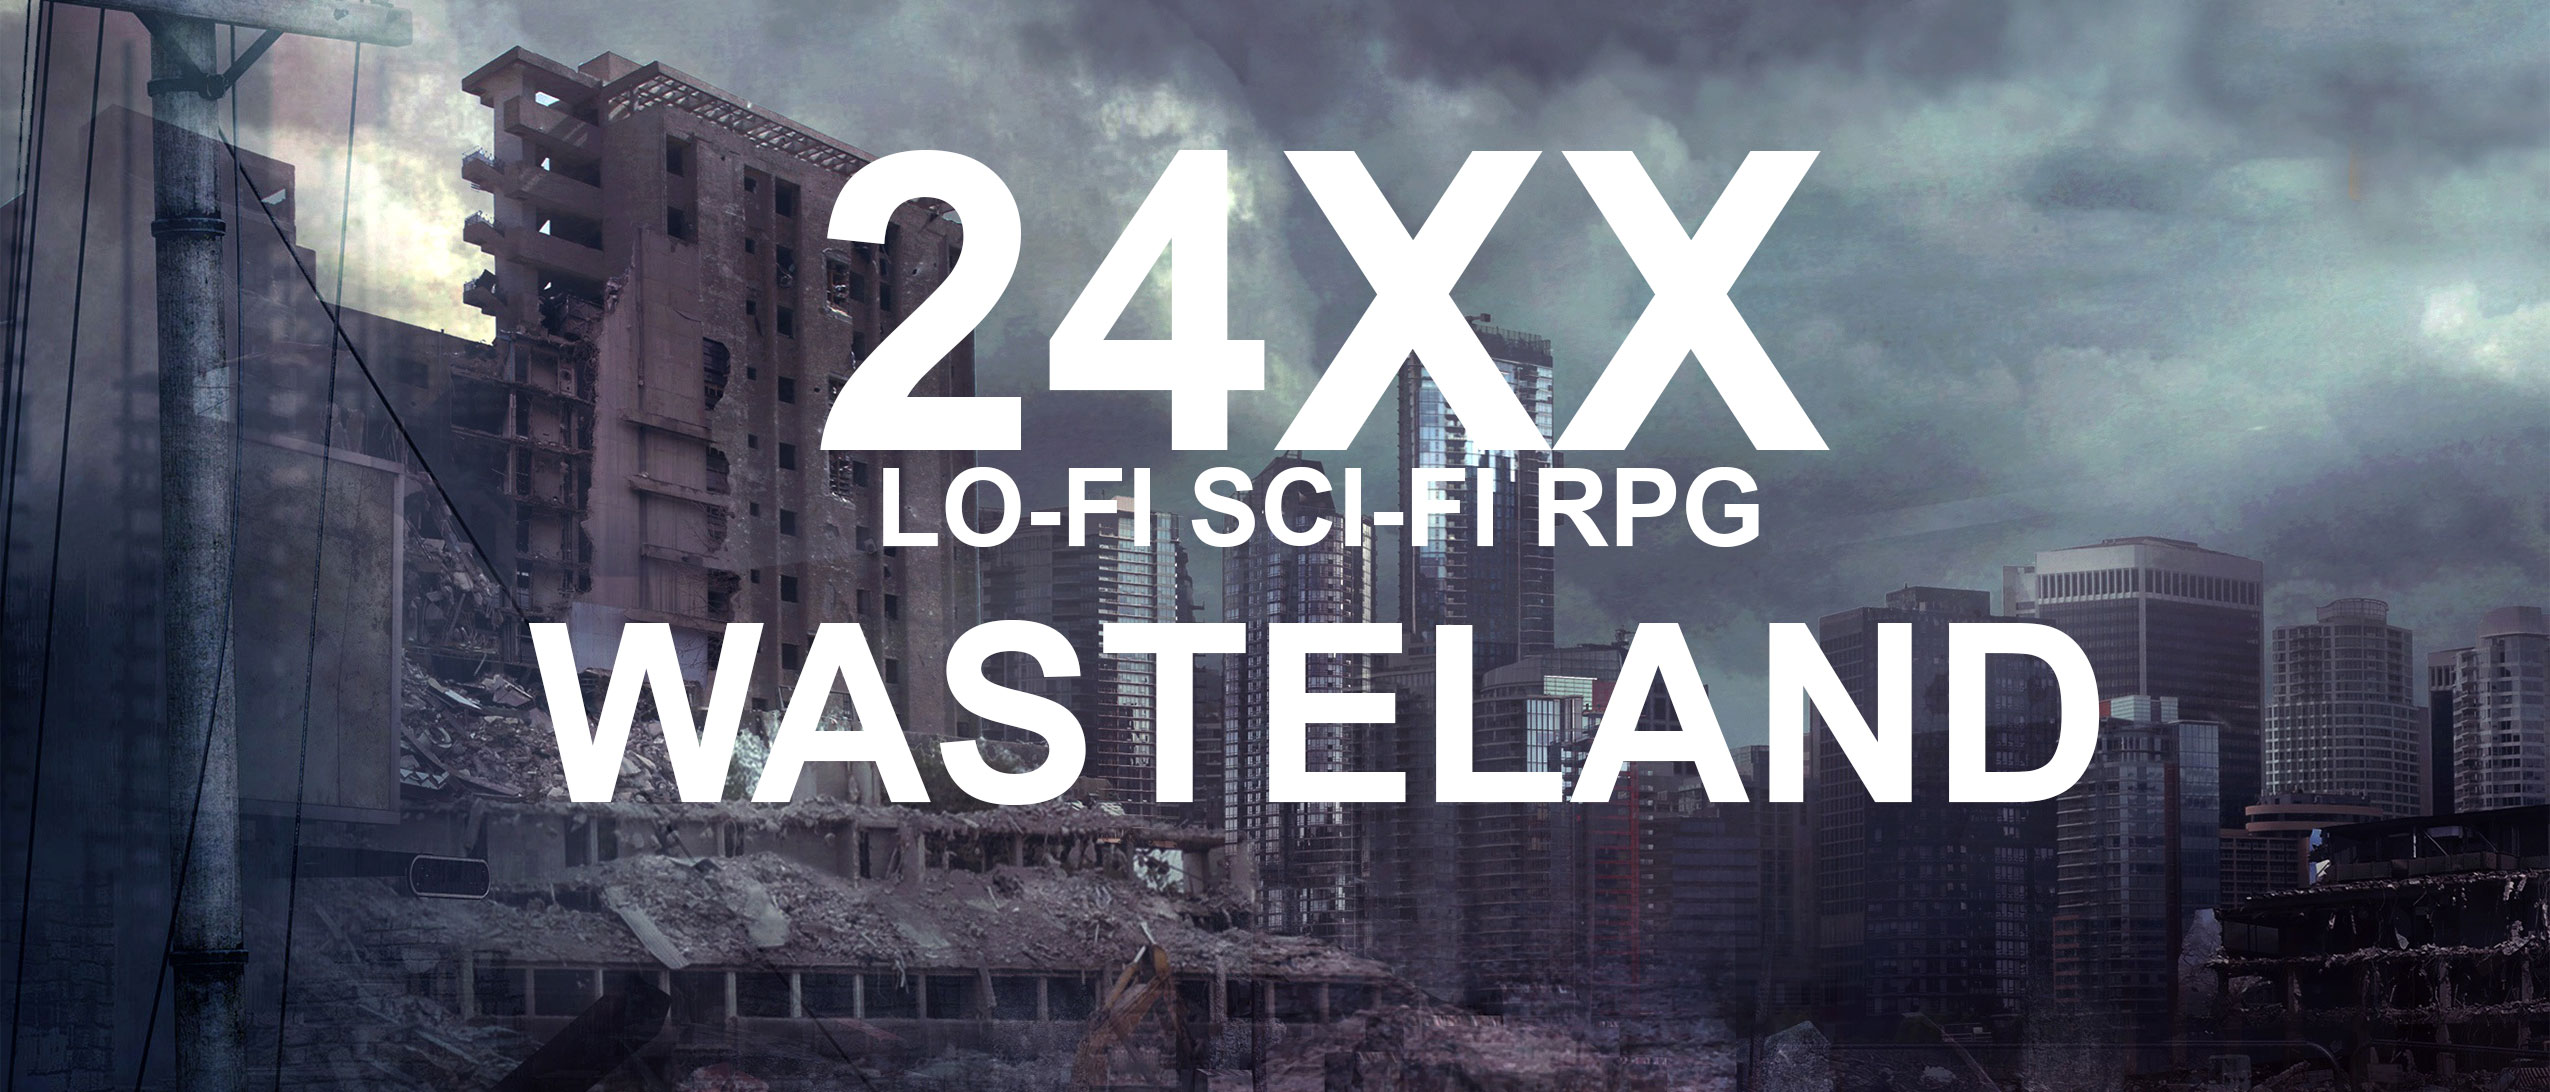 24XX: Wasteland